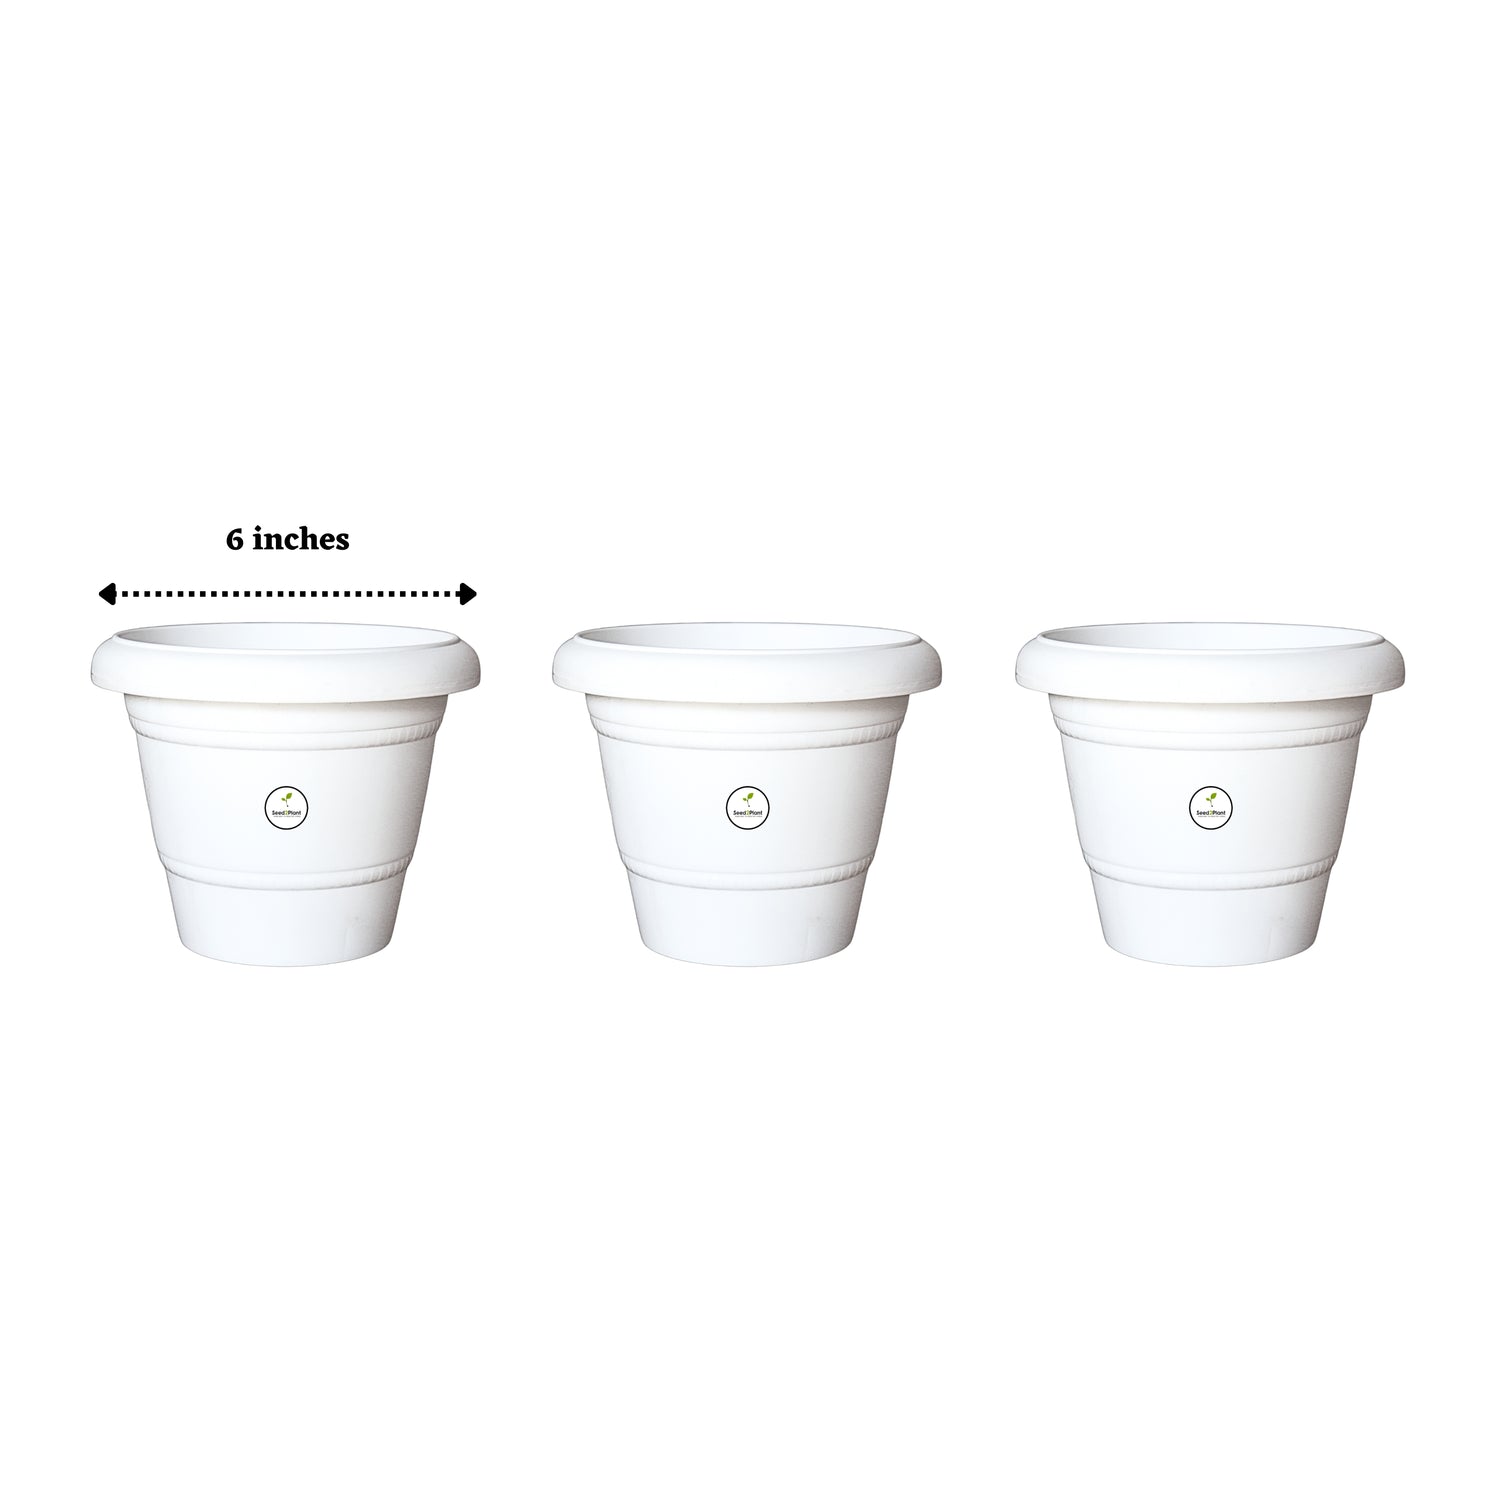 6 Inch UV Treated Plastic Pots - White Colour